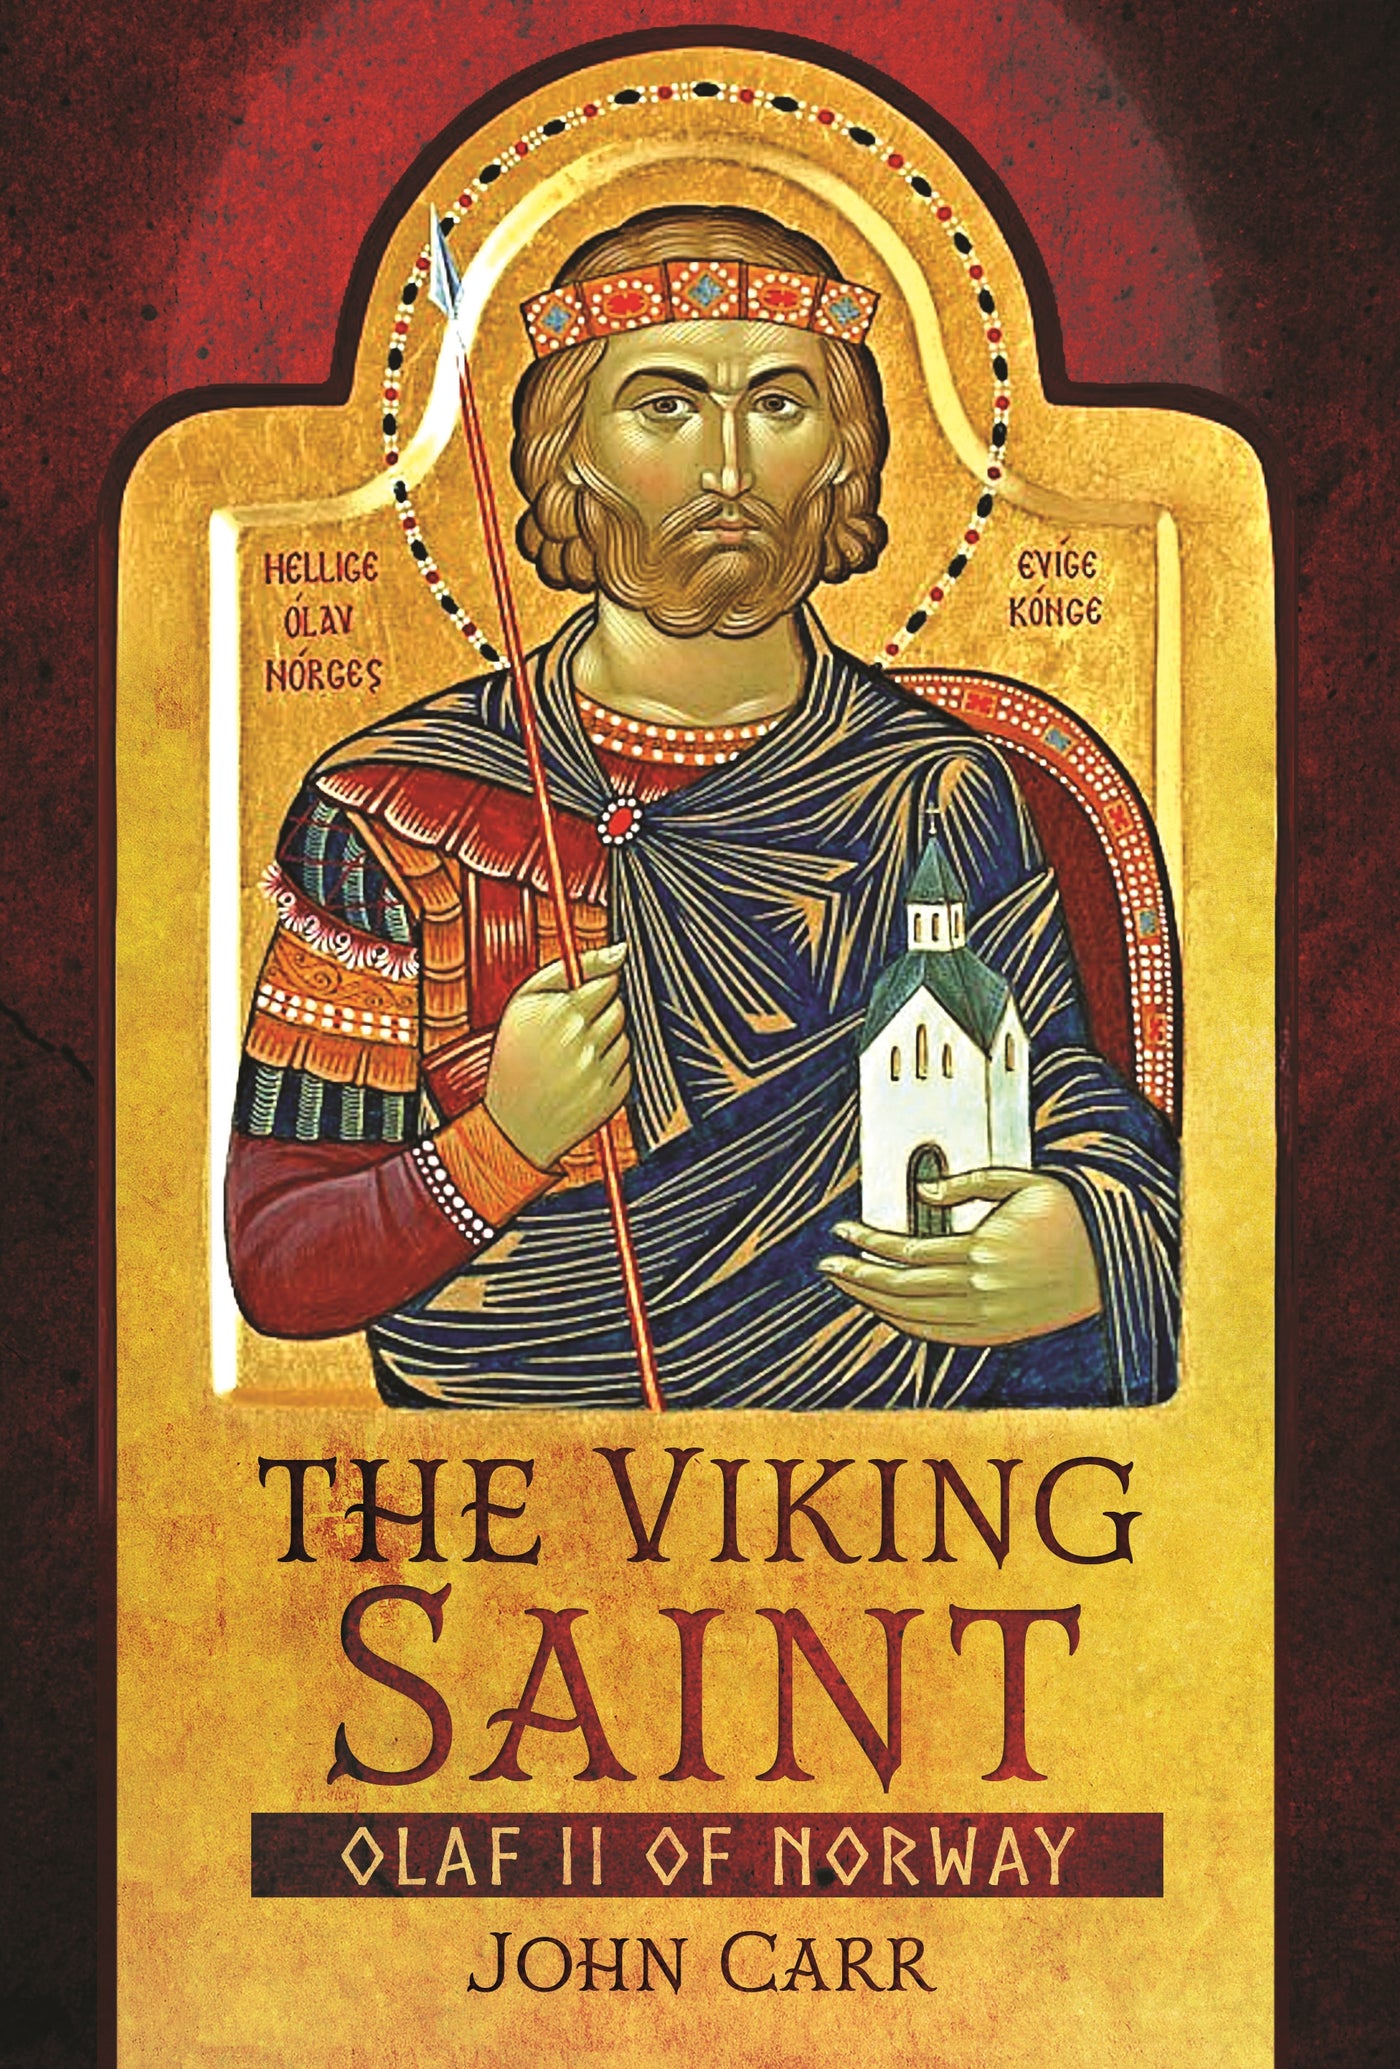 The Viking Saint